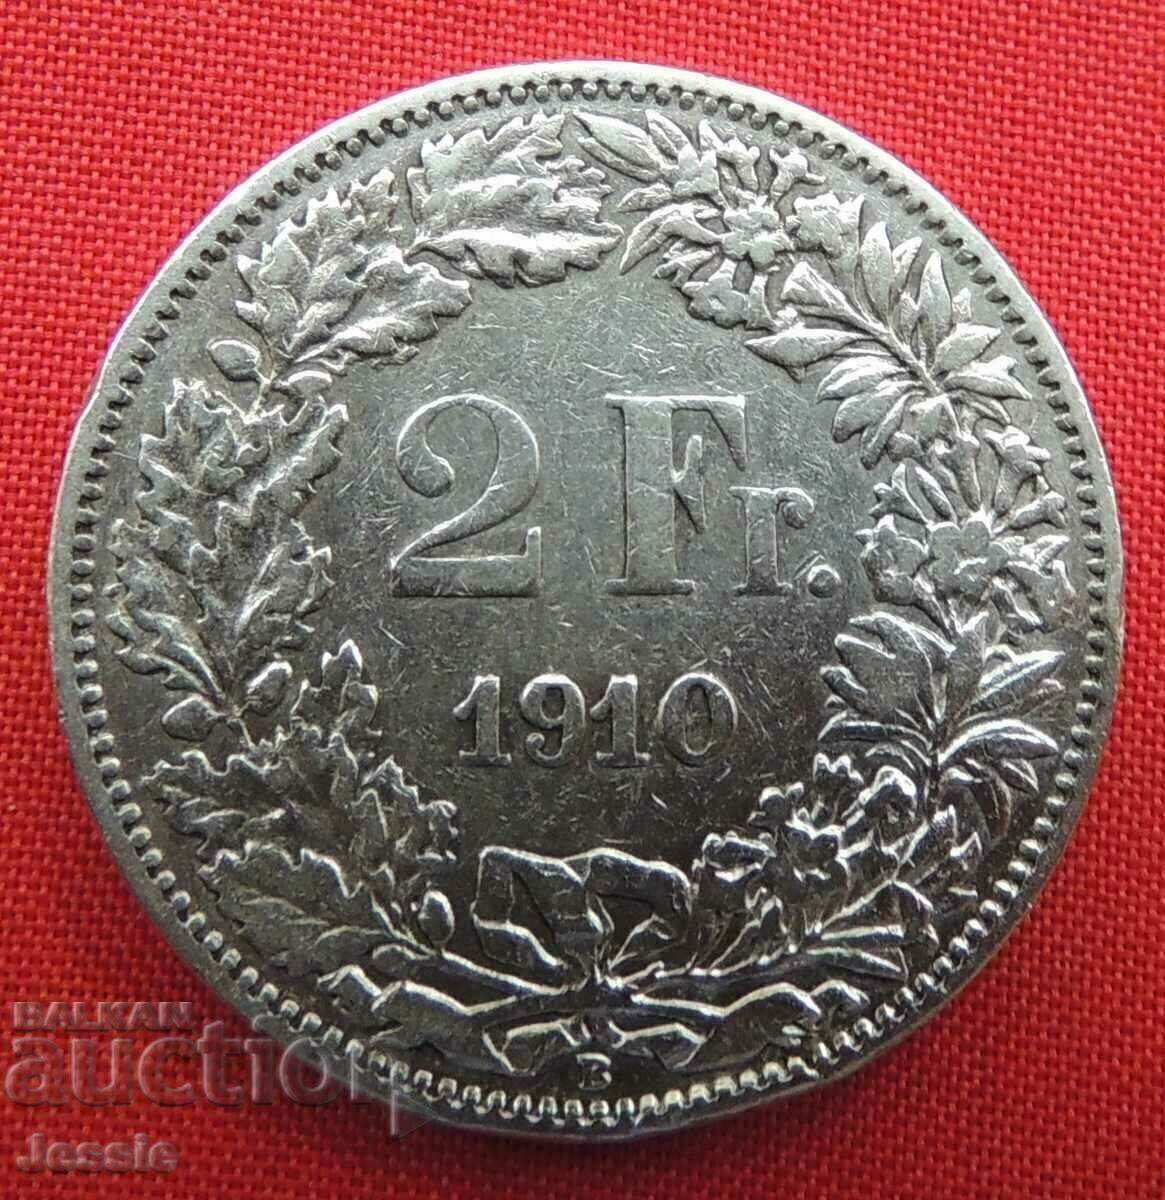 2 Francs 1910 B Switzerland Silver